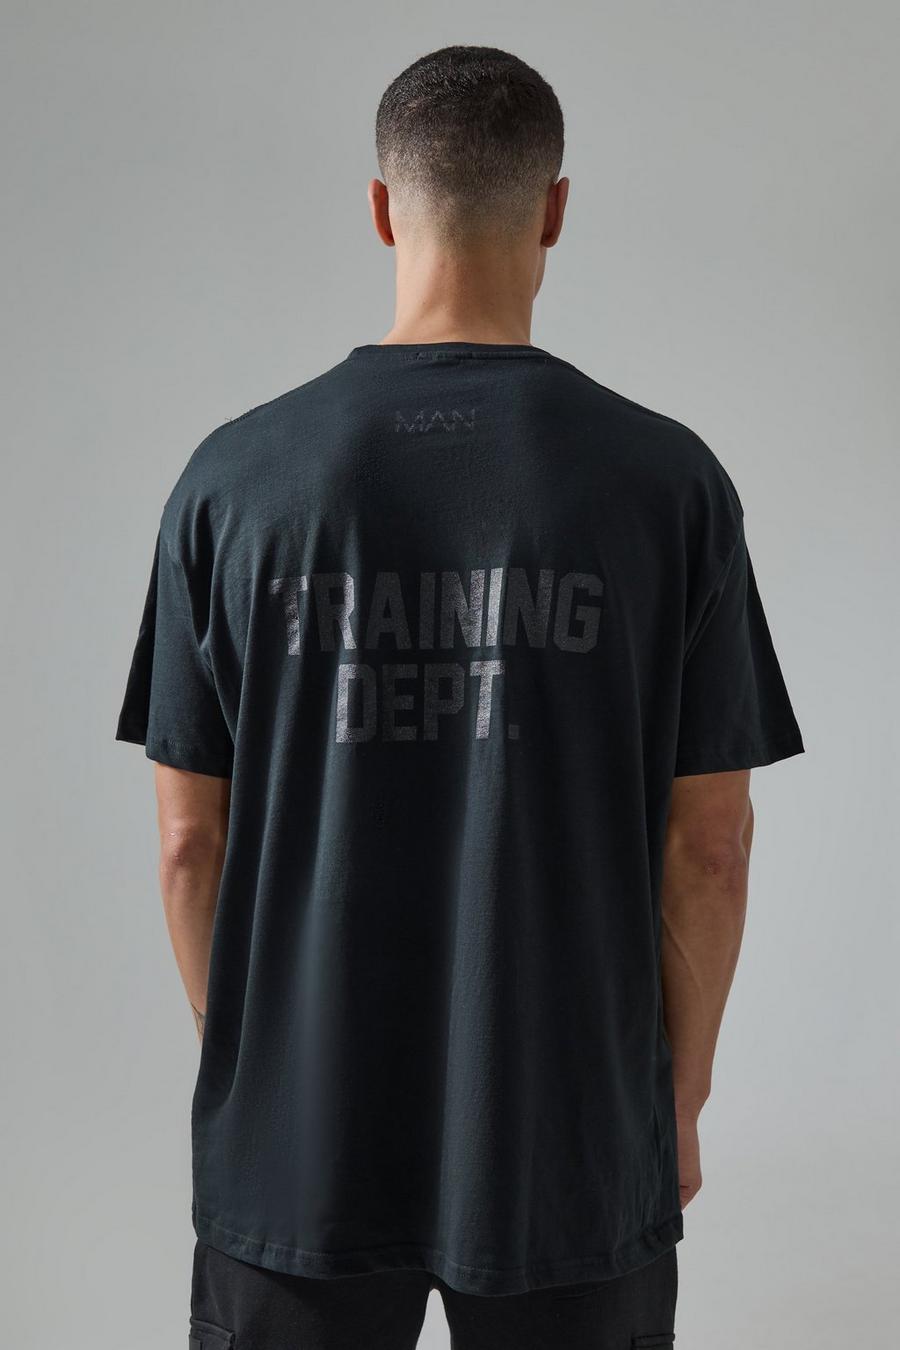 Black Active Training Dept Oversized Tshirt image number 1